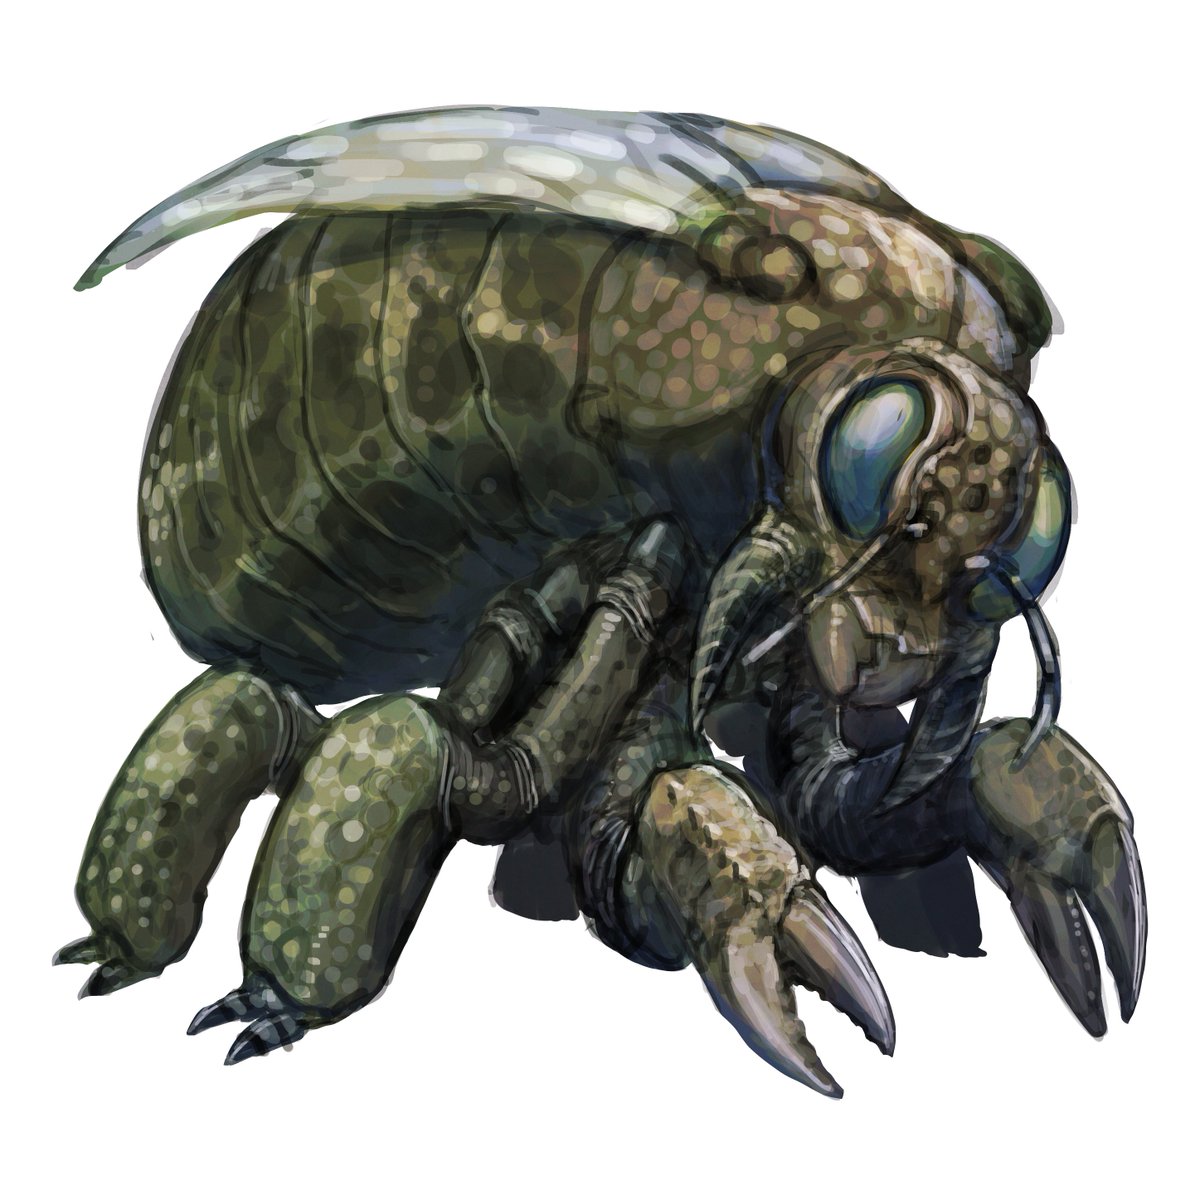 Kaijune day 21 - Green Hell Wasps